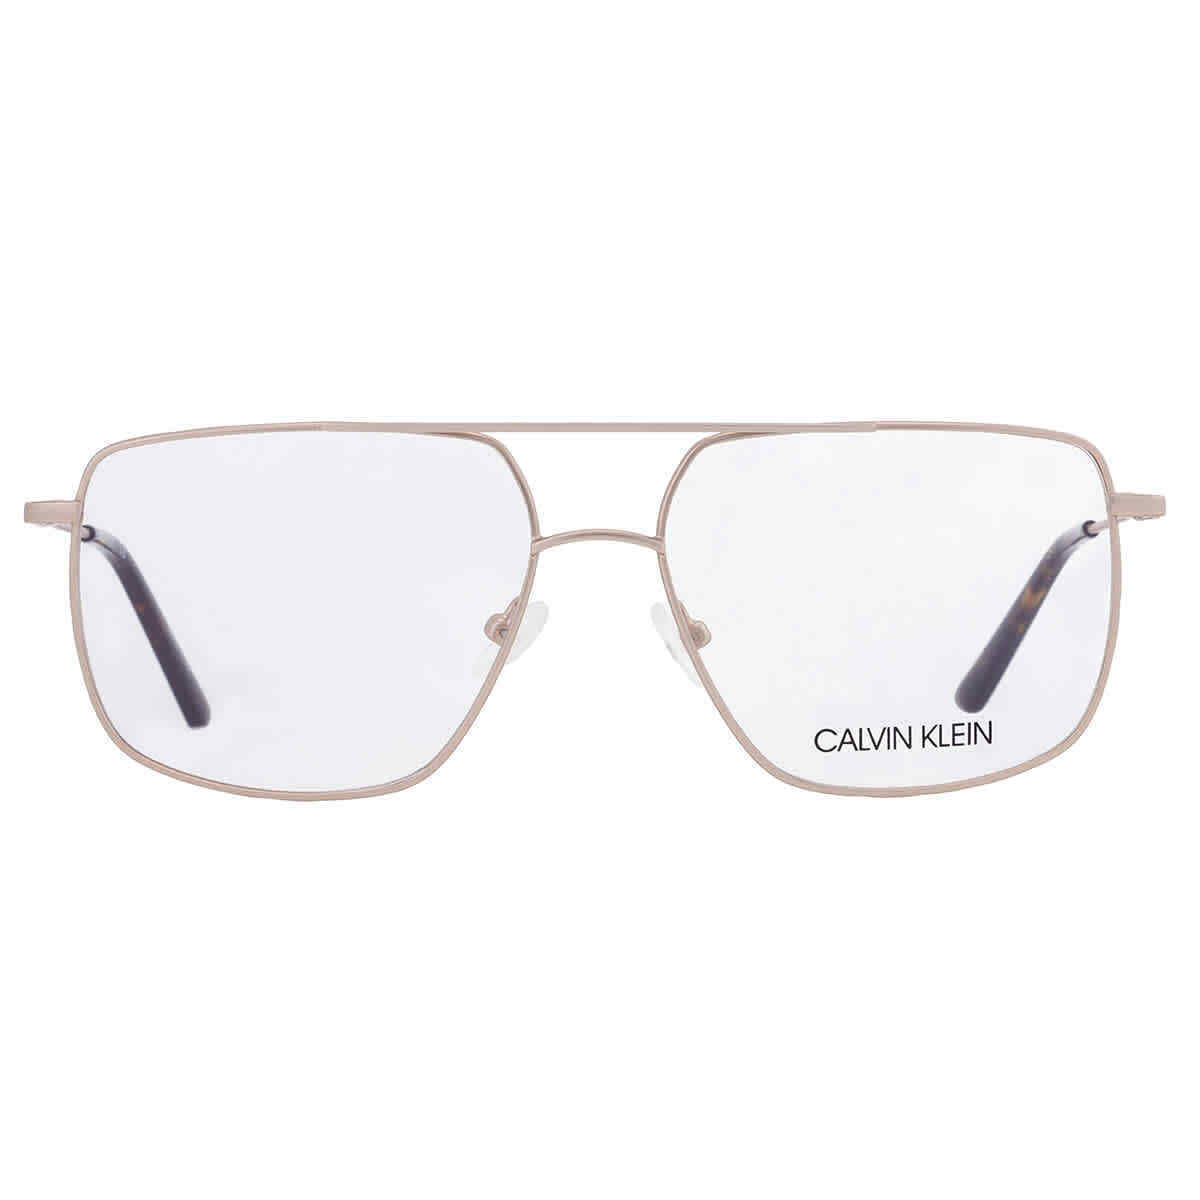 Calvin Klein CK19129-717-5515 55mm New Eyeglasses